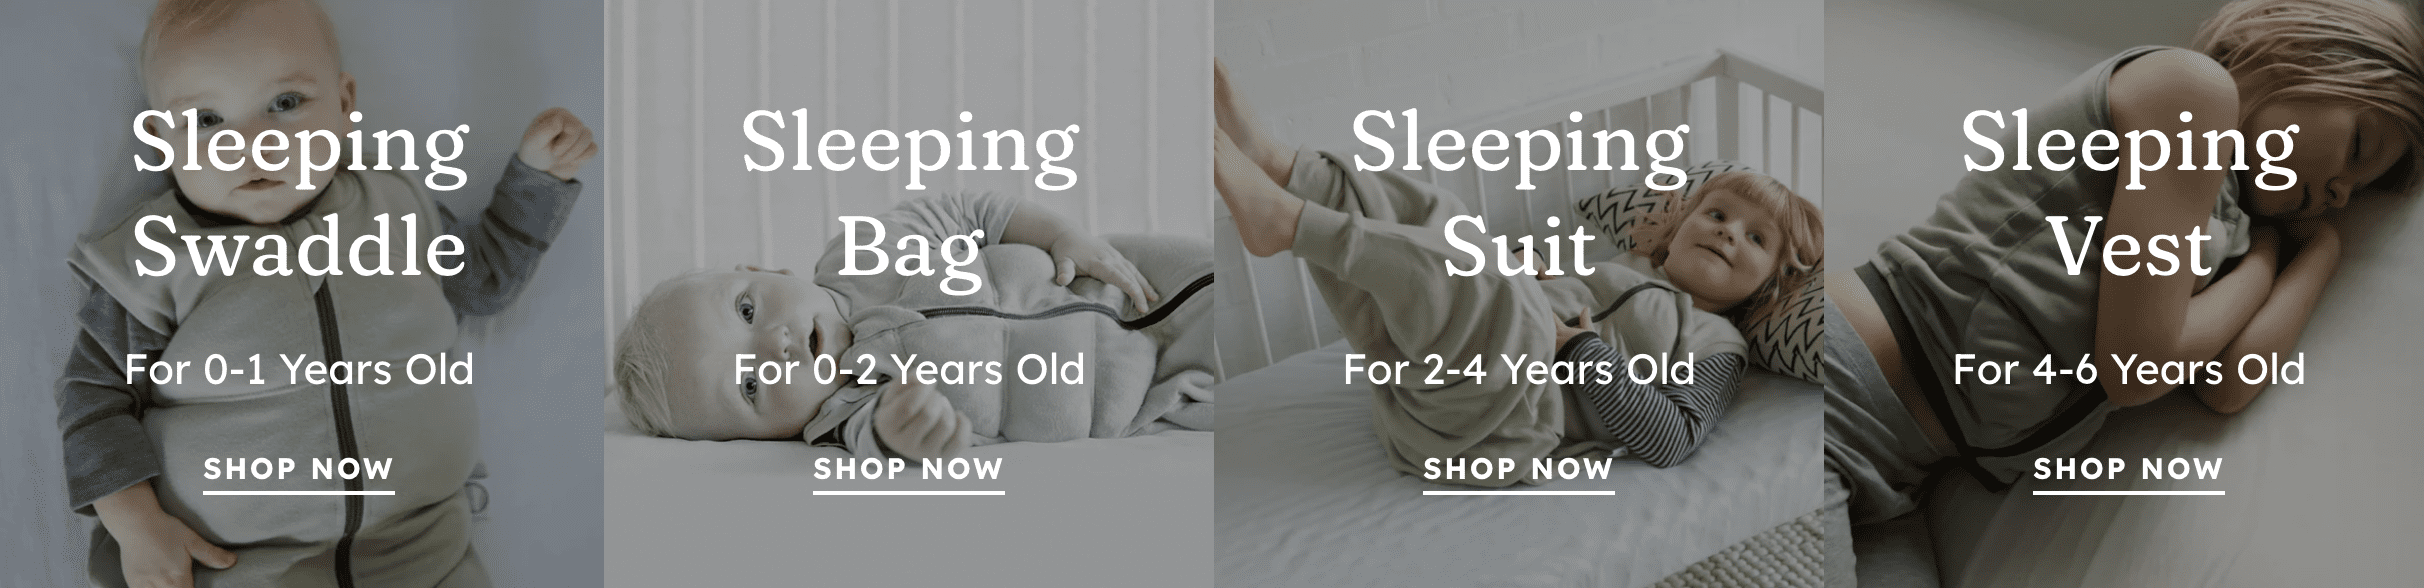 Enhance Sleep with the BabyDeepSleep Weighted Sleep Sack | Easy Sleep Guide